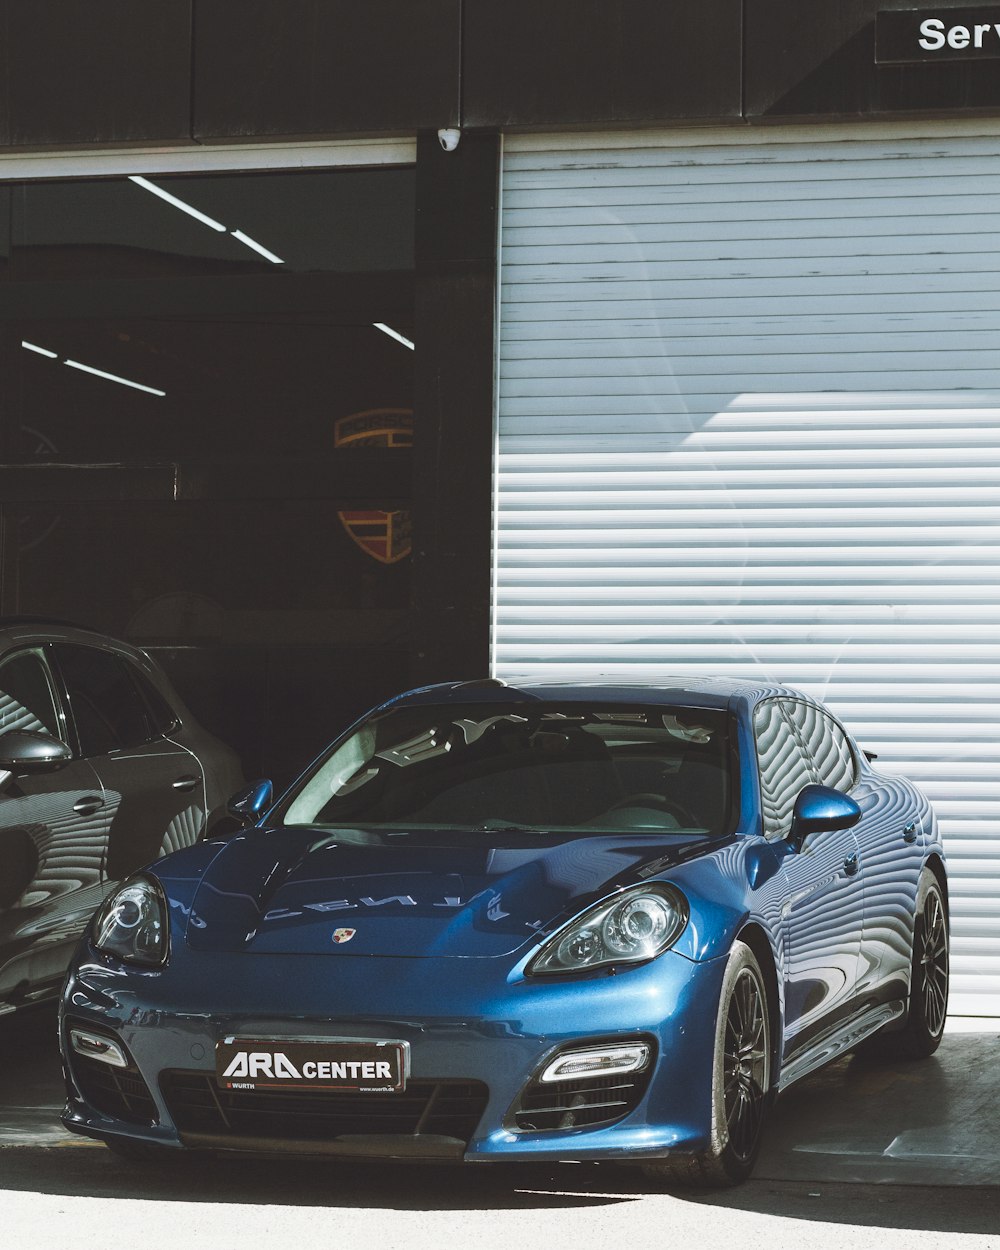 Porsche 911 azul estacionado na garagem